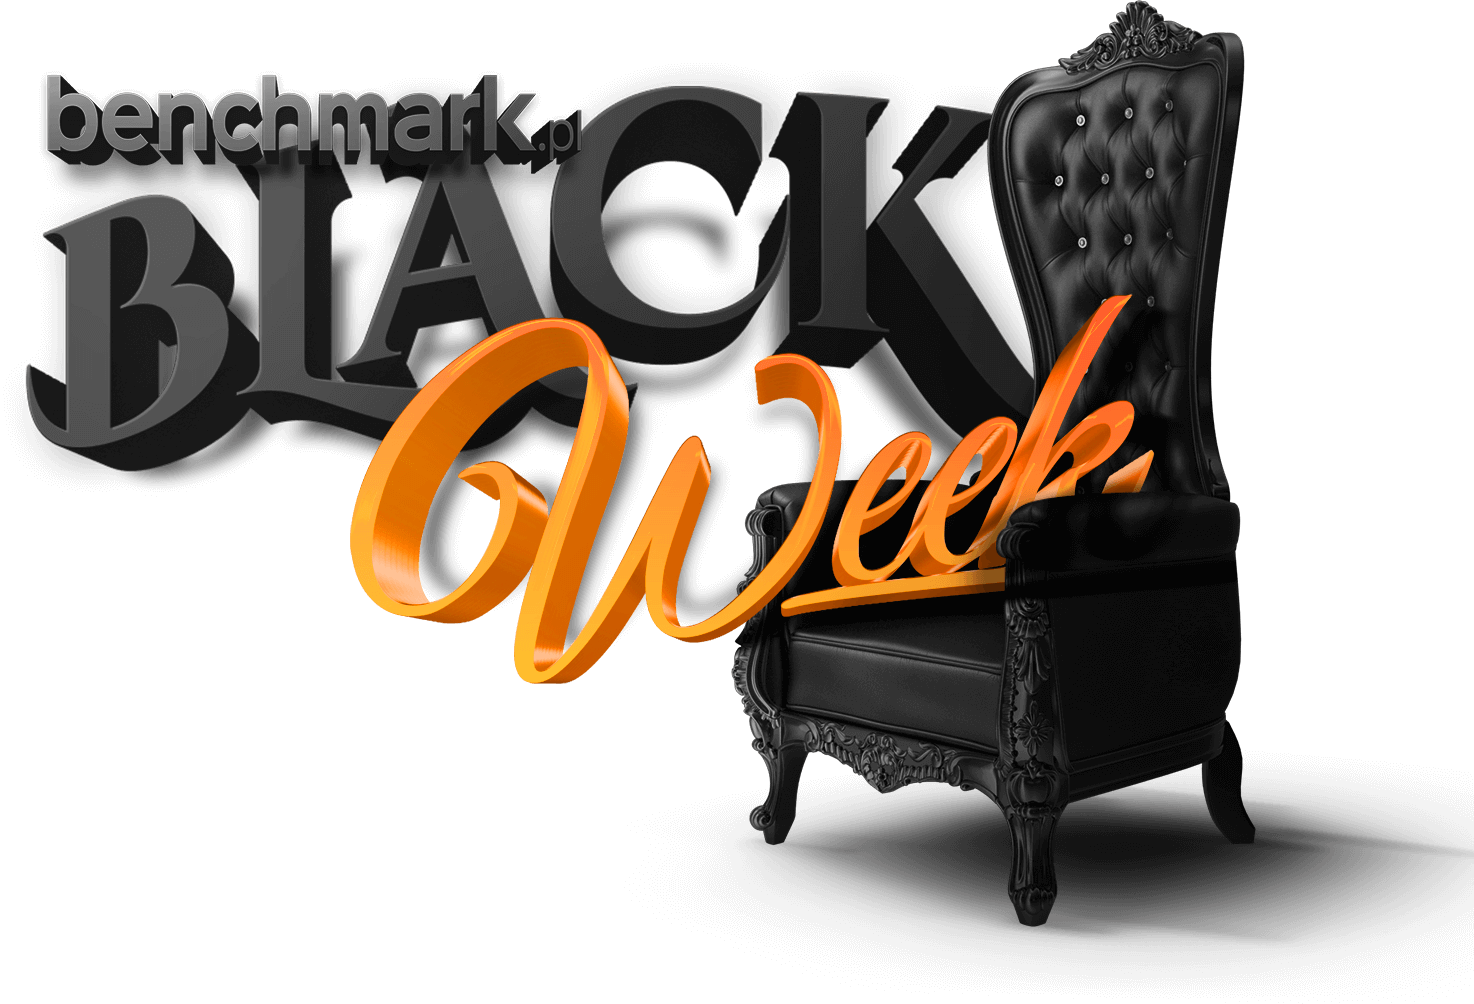 Black Week | benchmark.pl